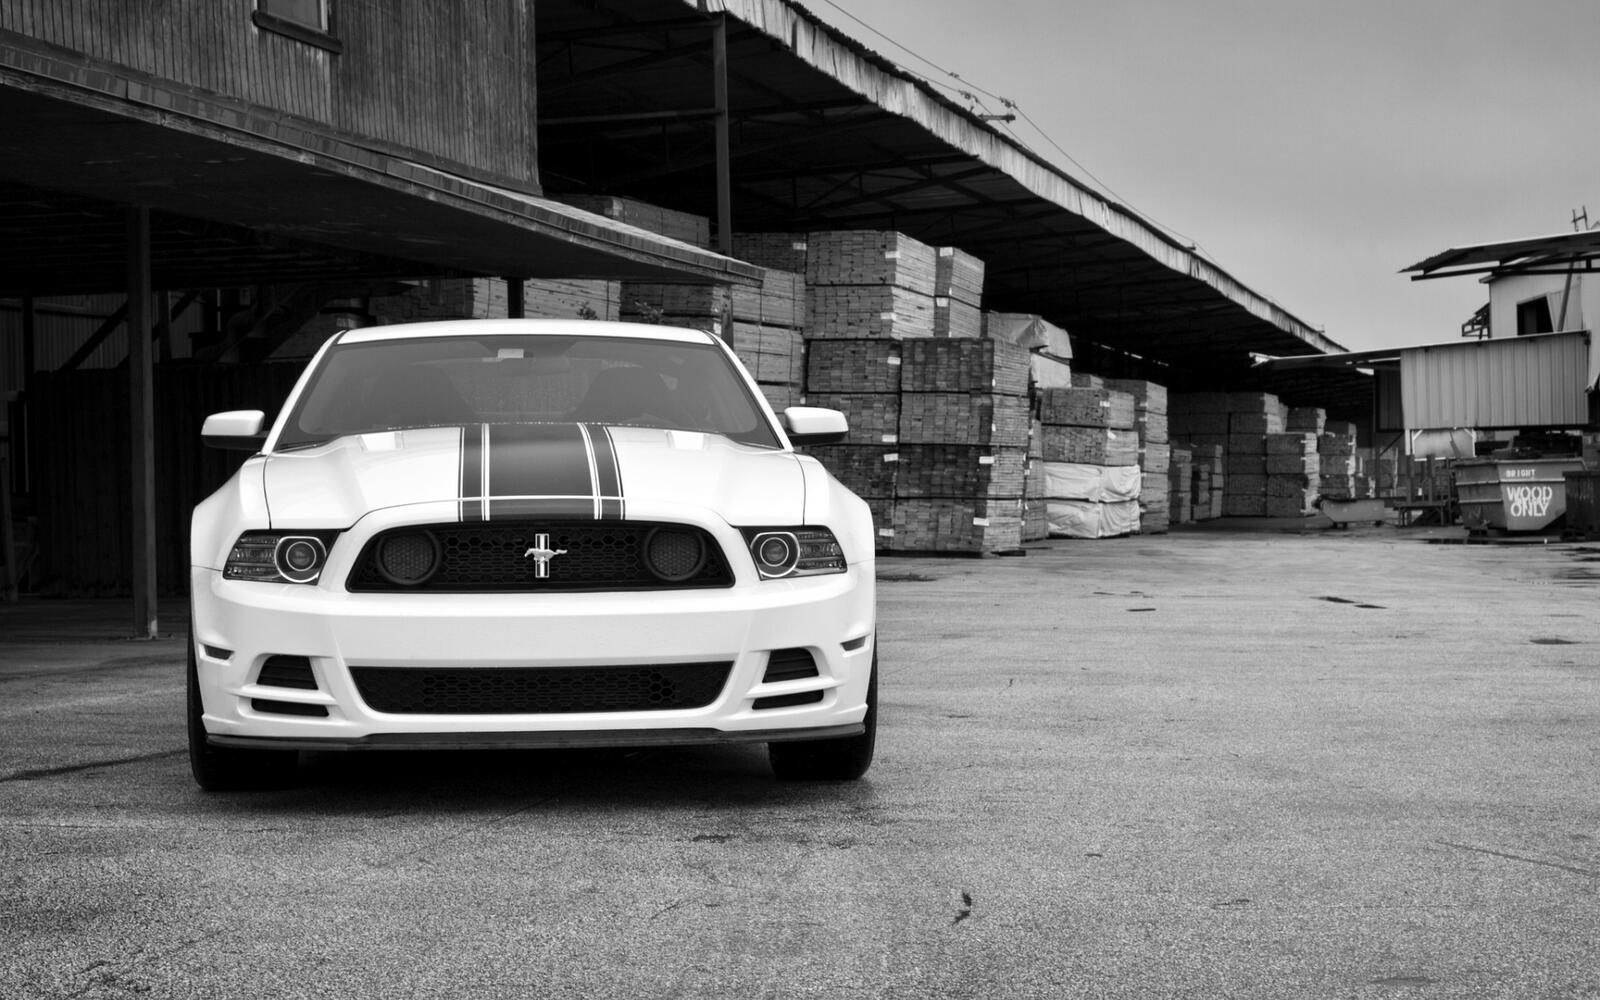 Бесплатное фото Форд мустанг белого цвета стоит на складе